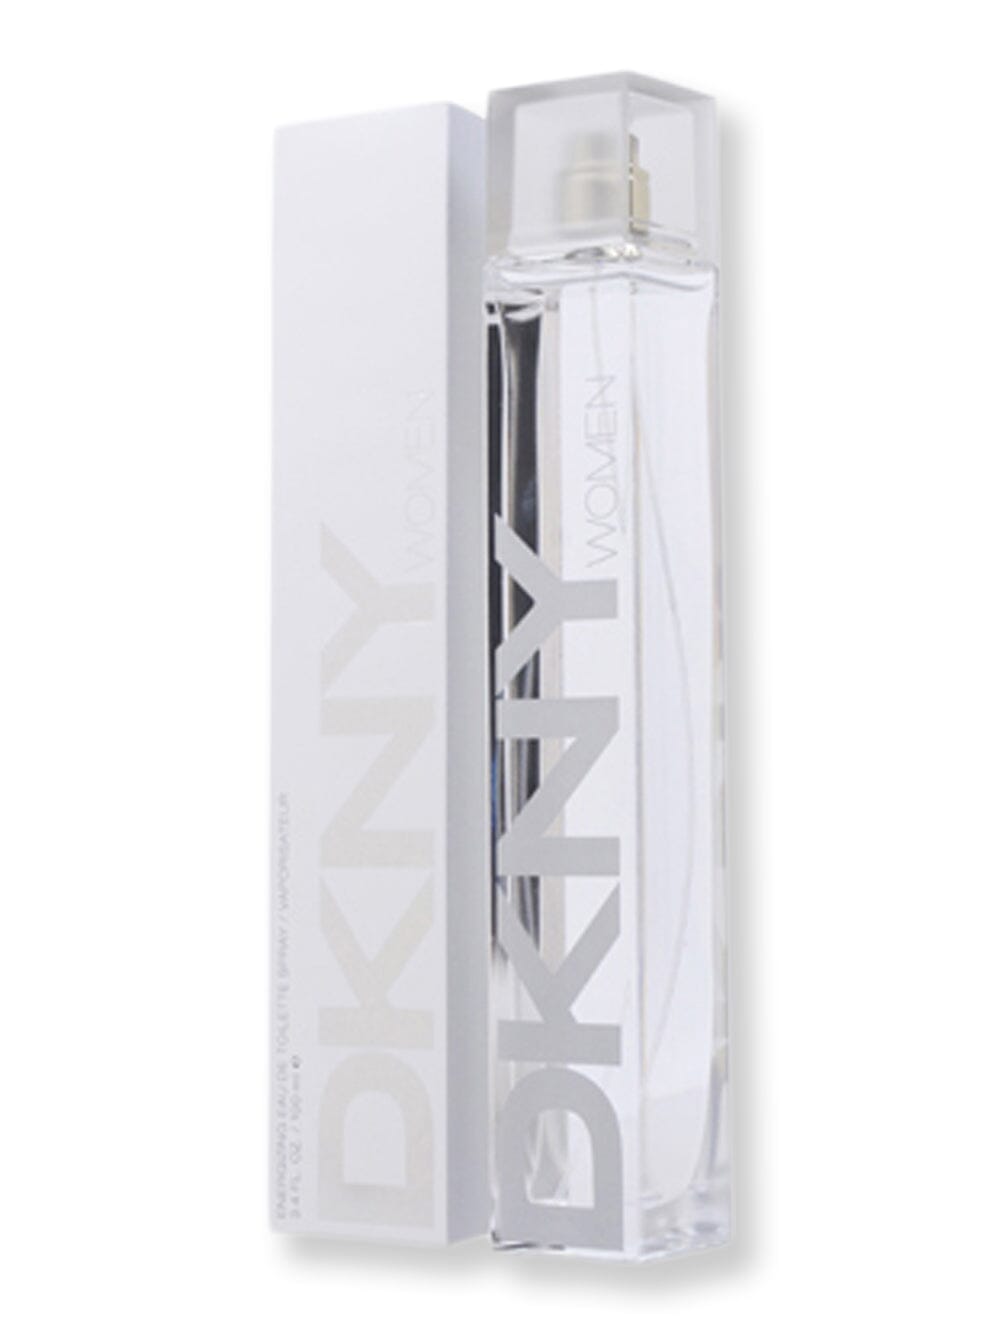 Donna Karan Donna Karan DKNY Women Energizing EDT Spray 3.4 oz100 ml Perfume 